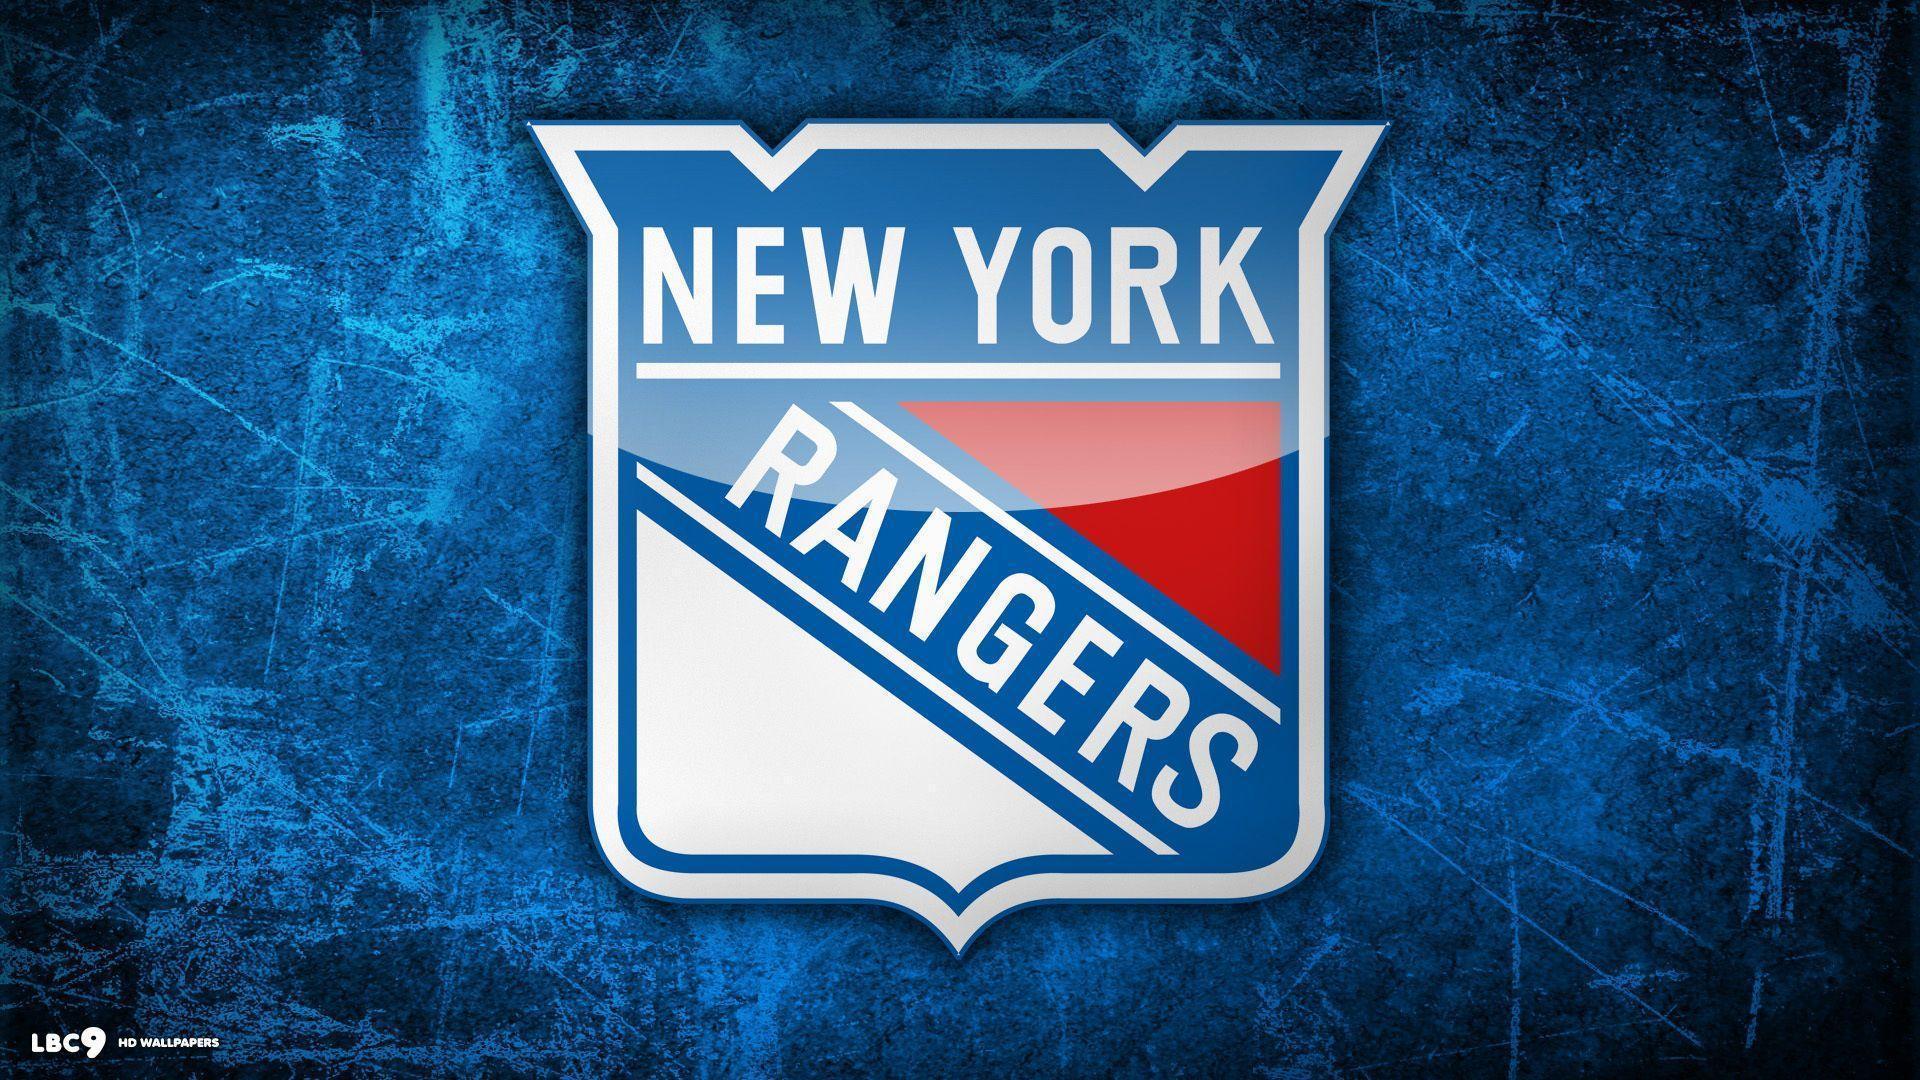 New York Rangers Wallpapers - Top Free